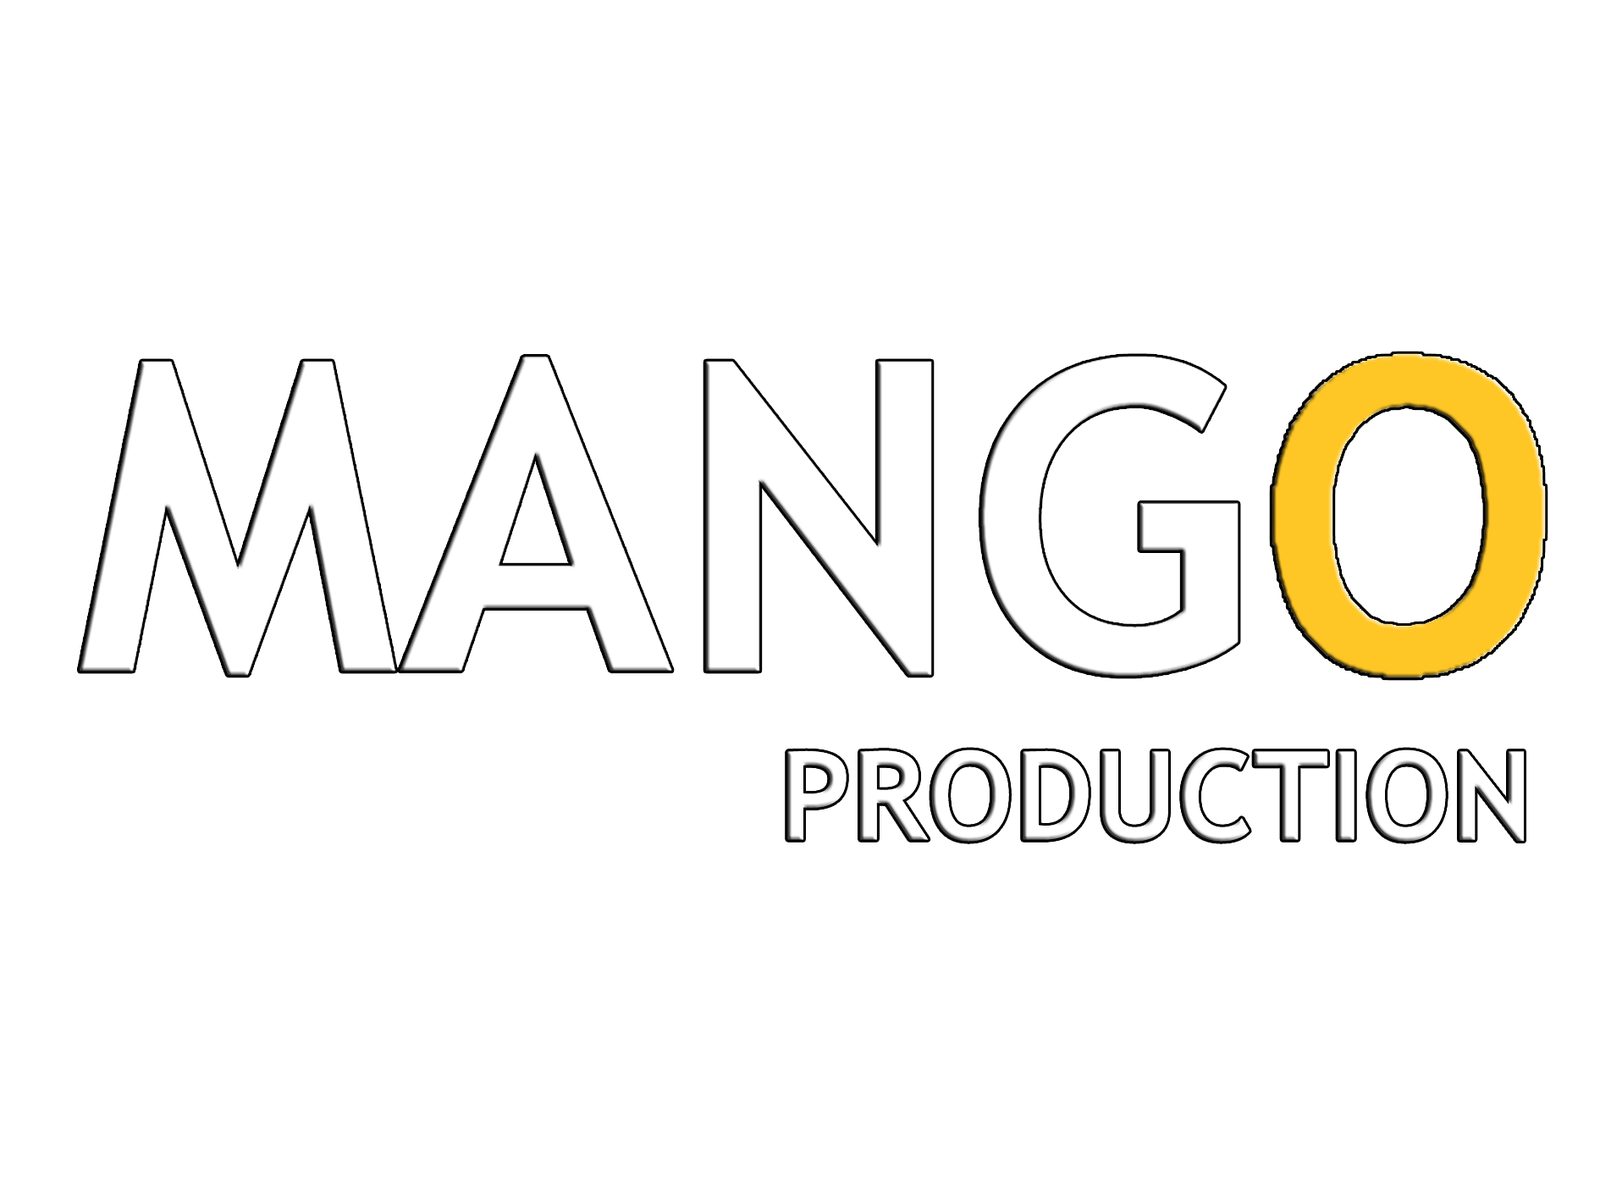 Mango, Mango Element, Mango Fruit, Fruit PNG Hd Transparent Image And  Clipart Image For Free Download - Lovepik | 401350994